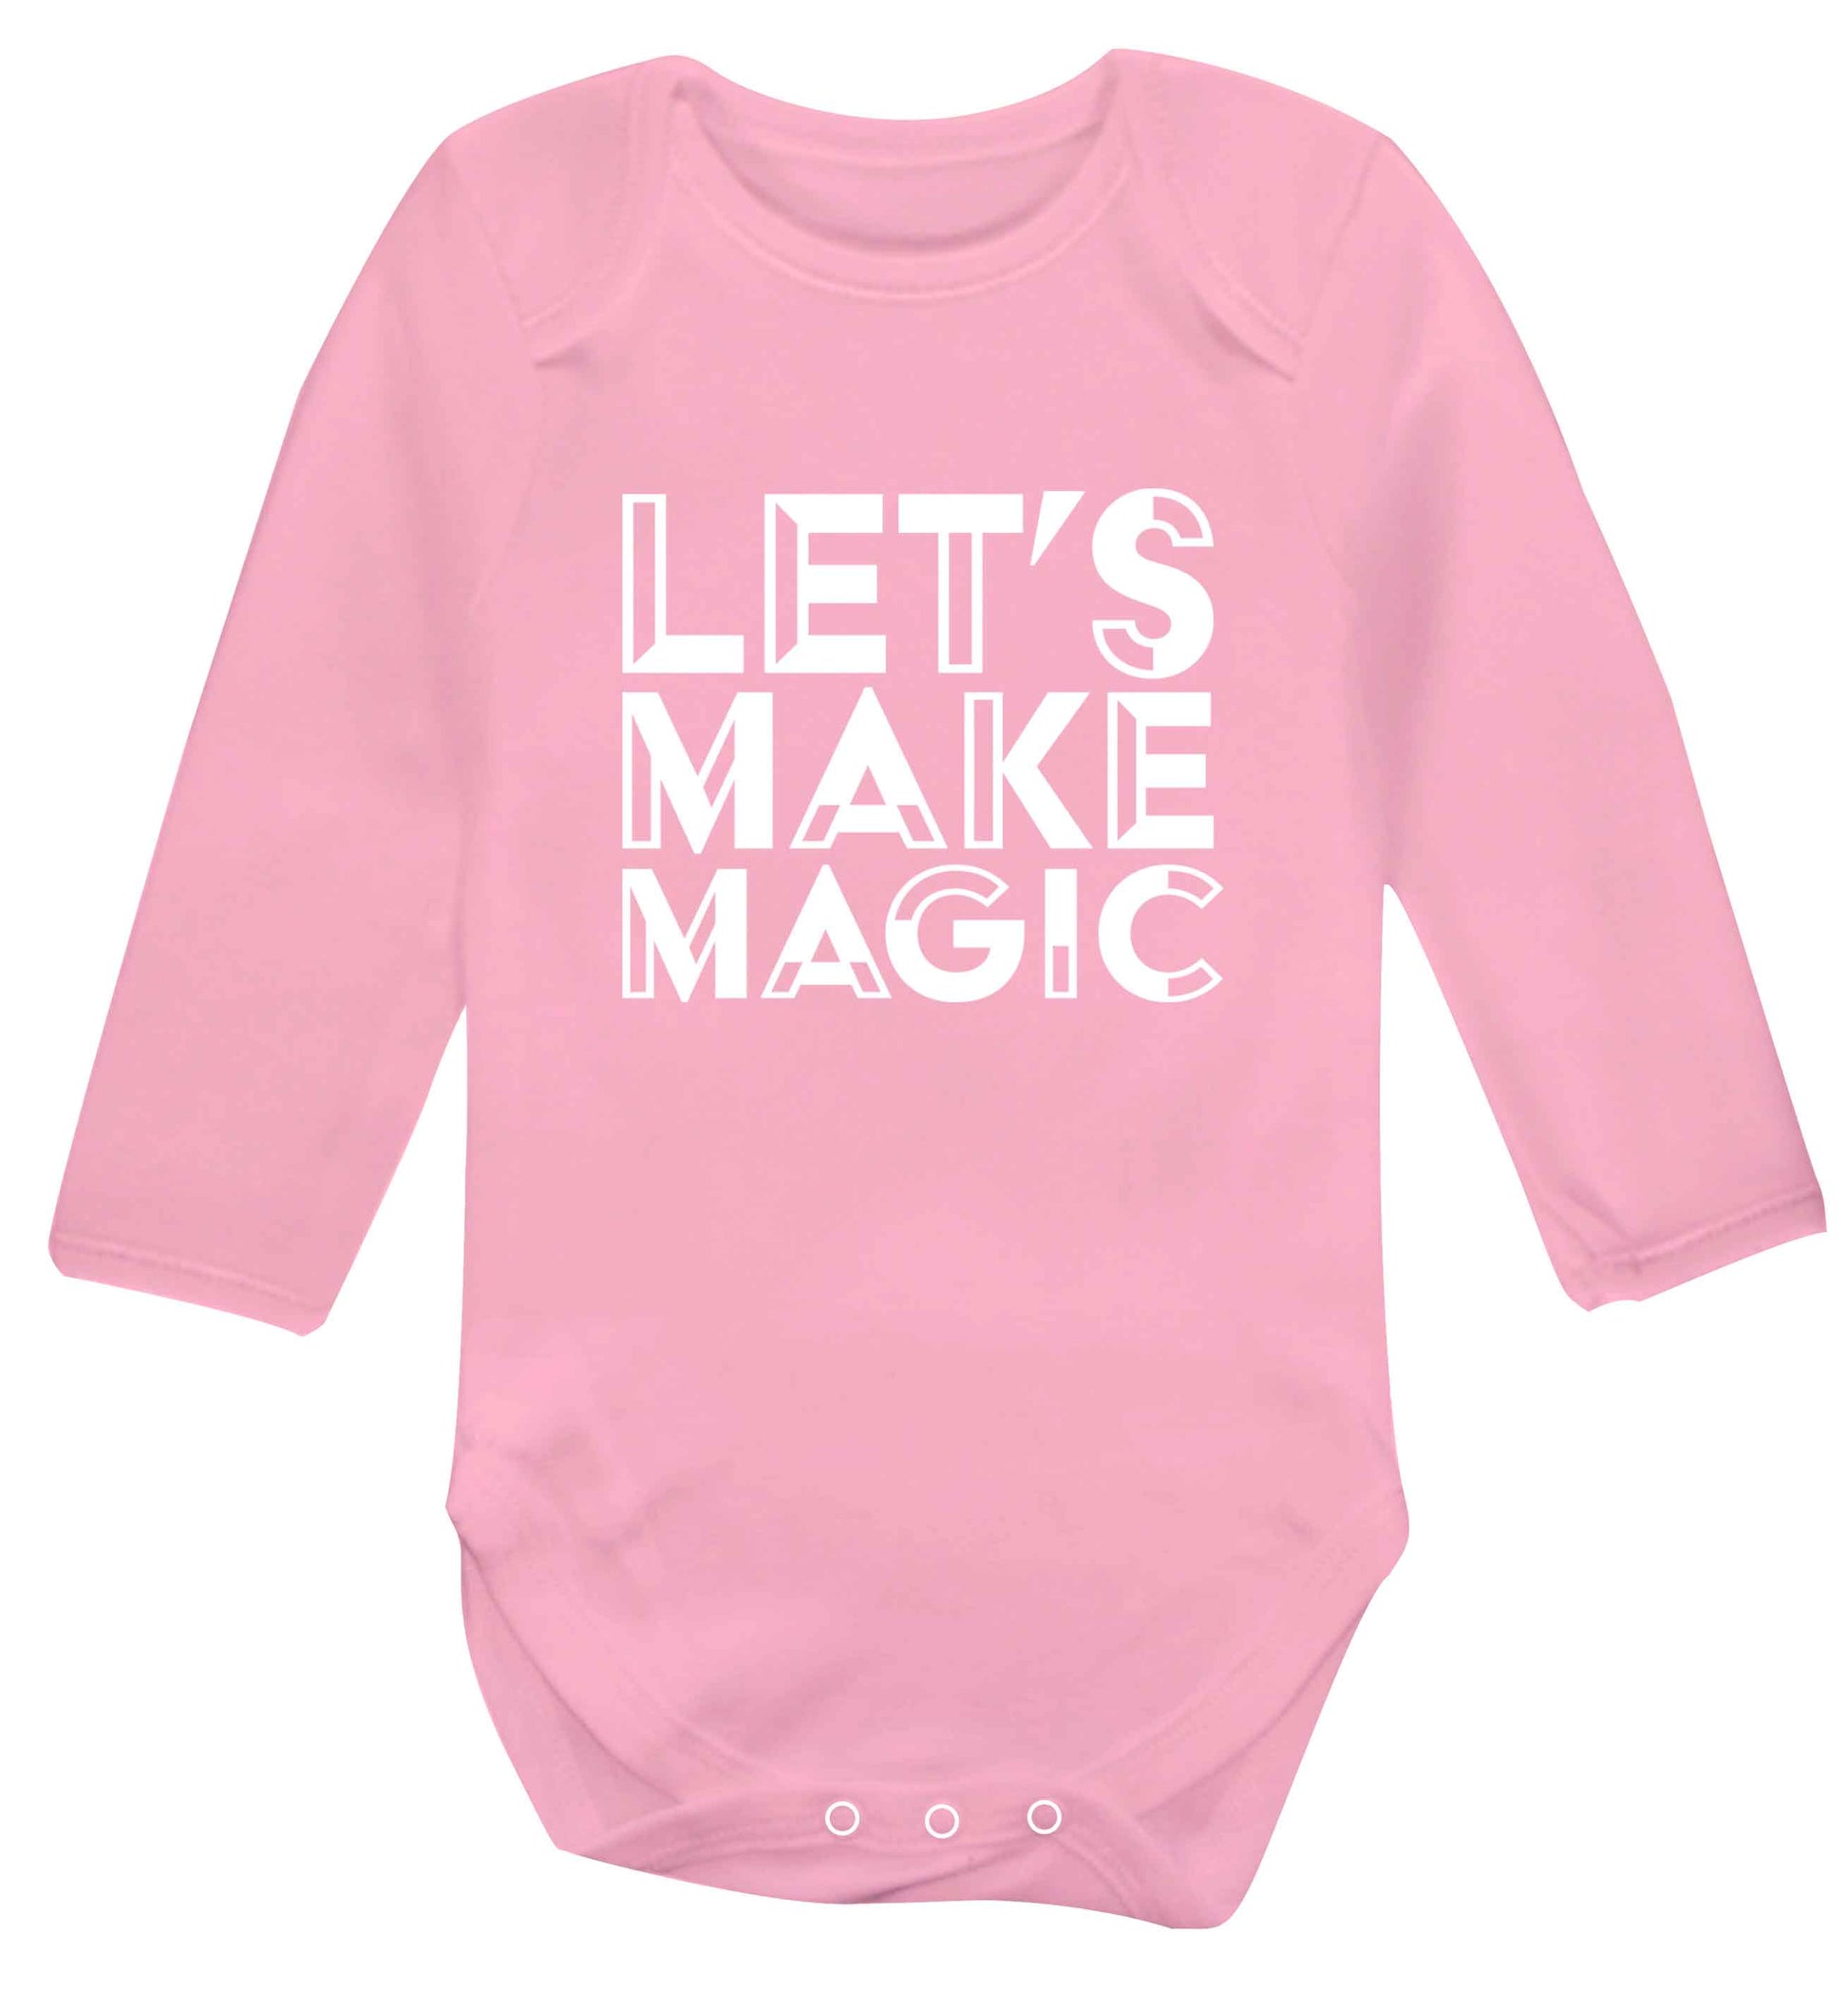 Let's make magic baby vest long sleeved pale pink 6-12 months